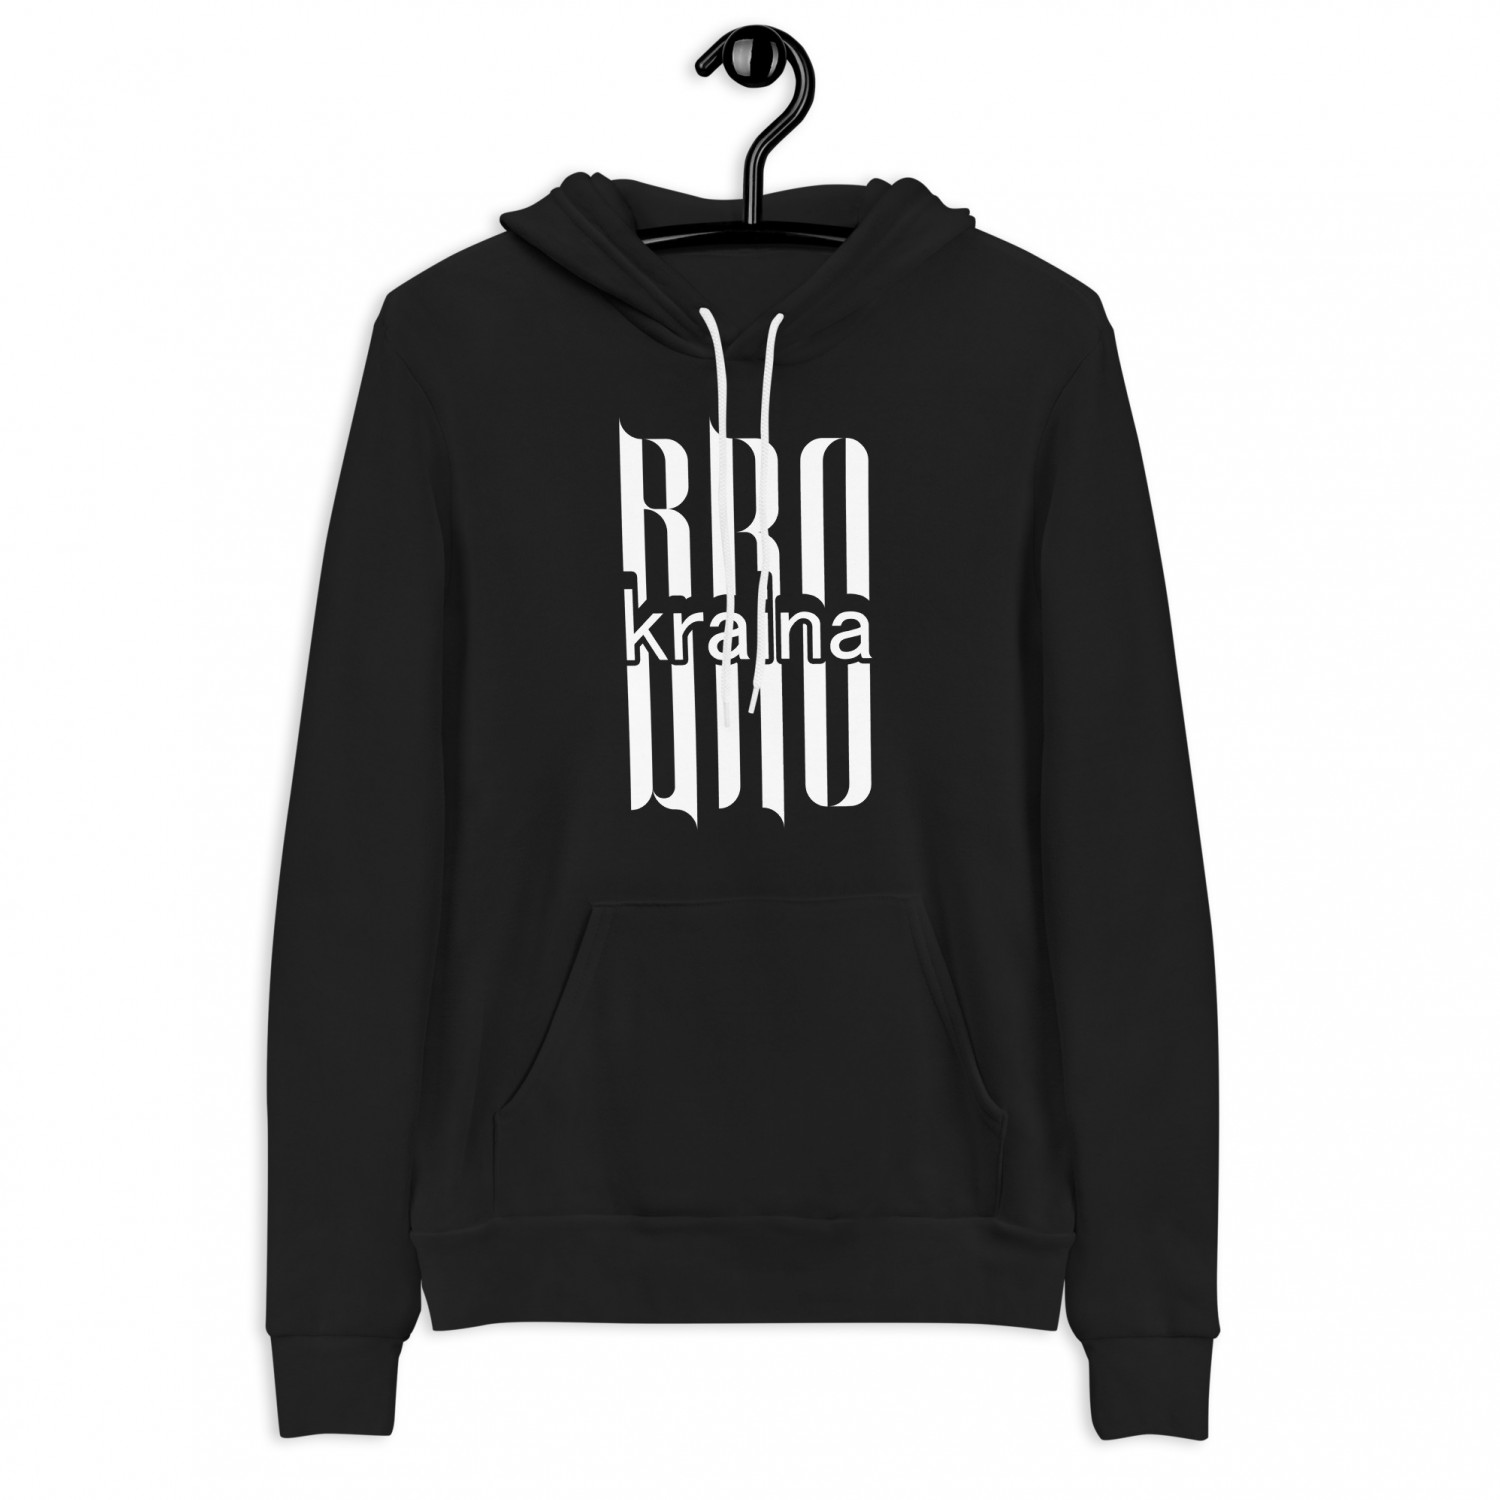 Buy a warm Bro Kraina hoodie